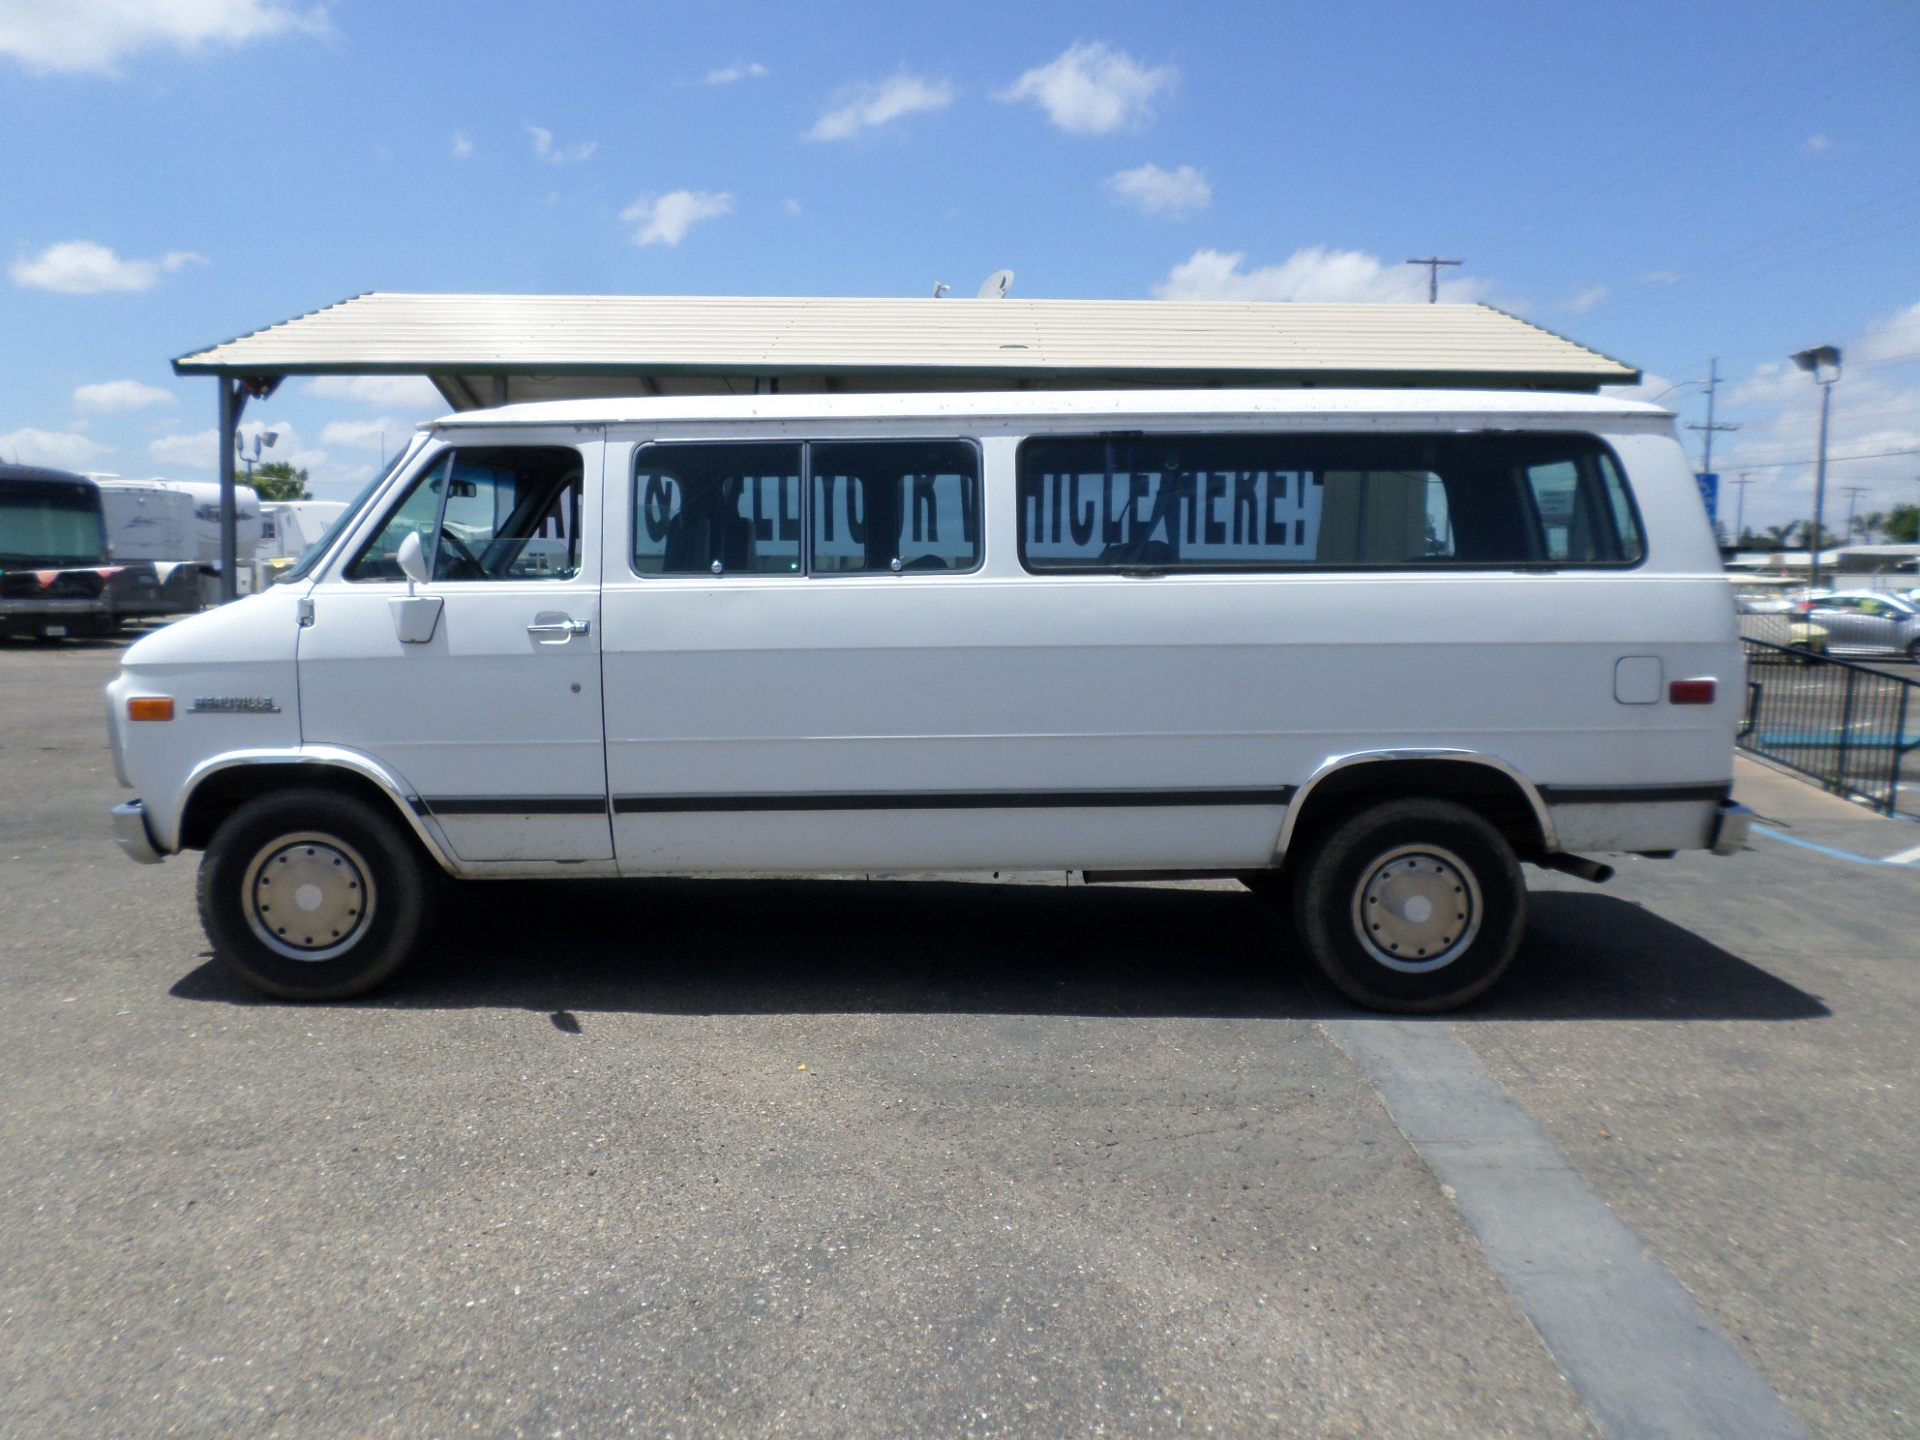 Van for sale: 1992 Chevrolet G30 Van in Lodi Stockton CA - Lodi Park and Sell